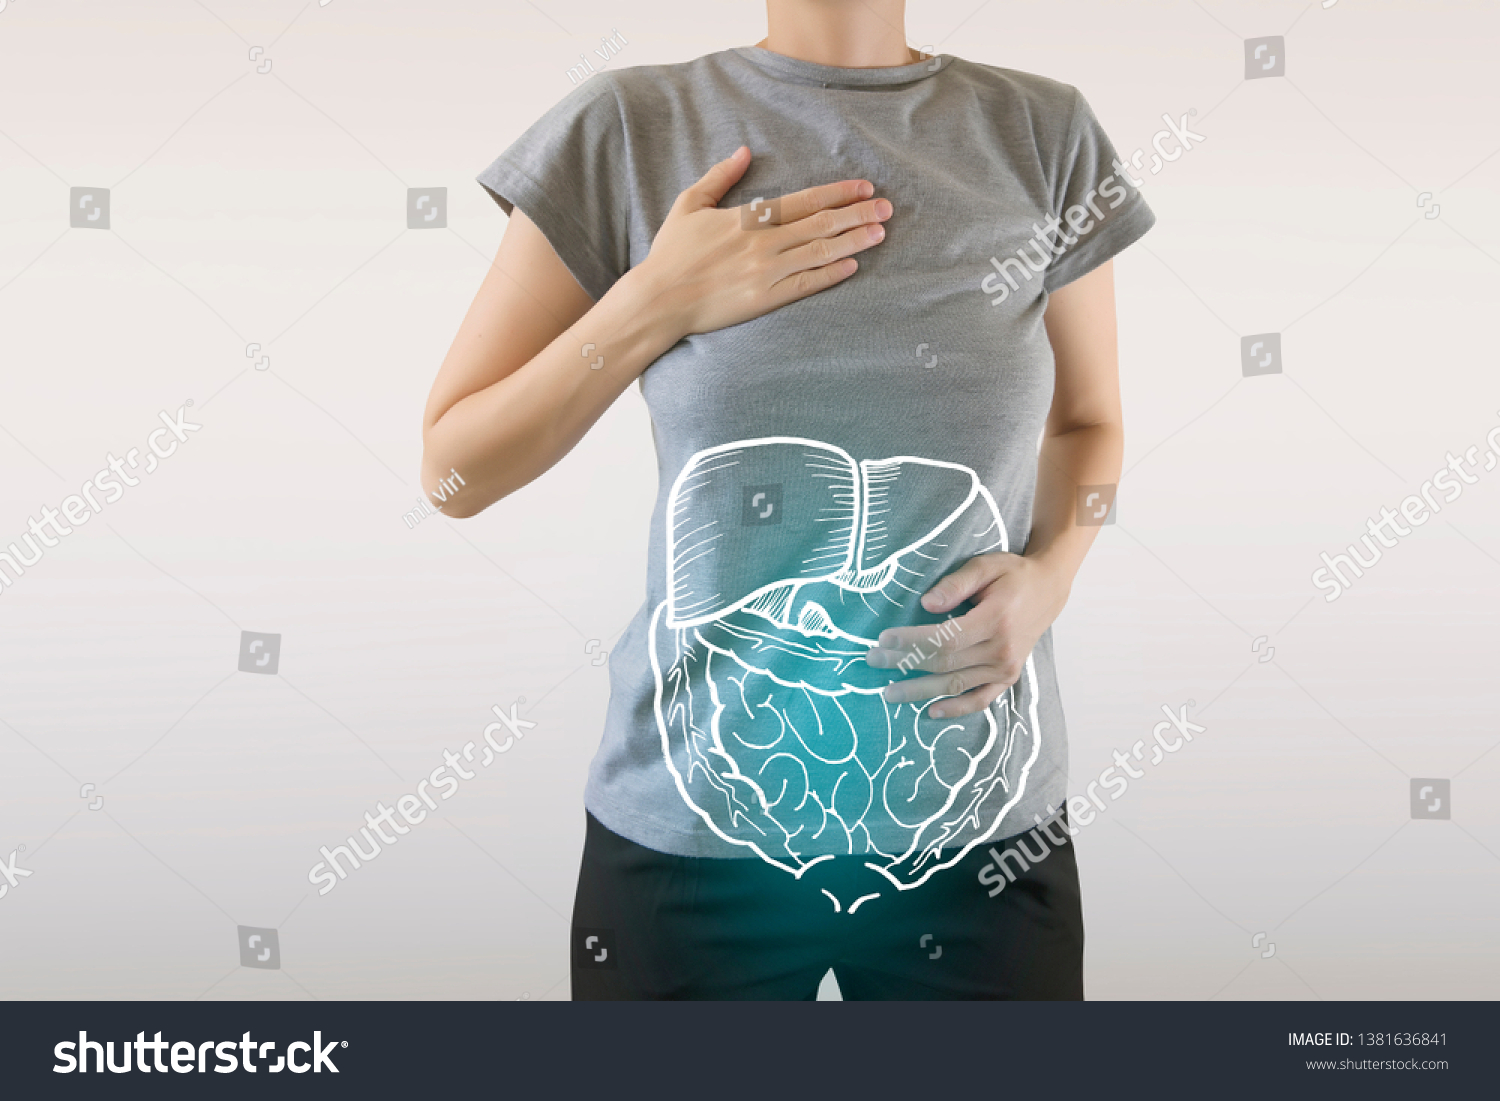 Highlighted Blue Internal Organs Healthy Human Stock Photo 1381636841 ...